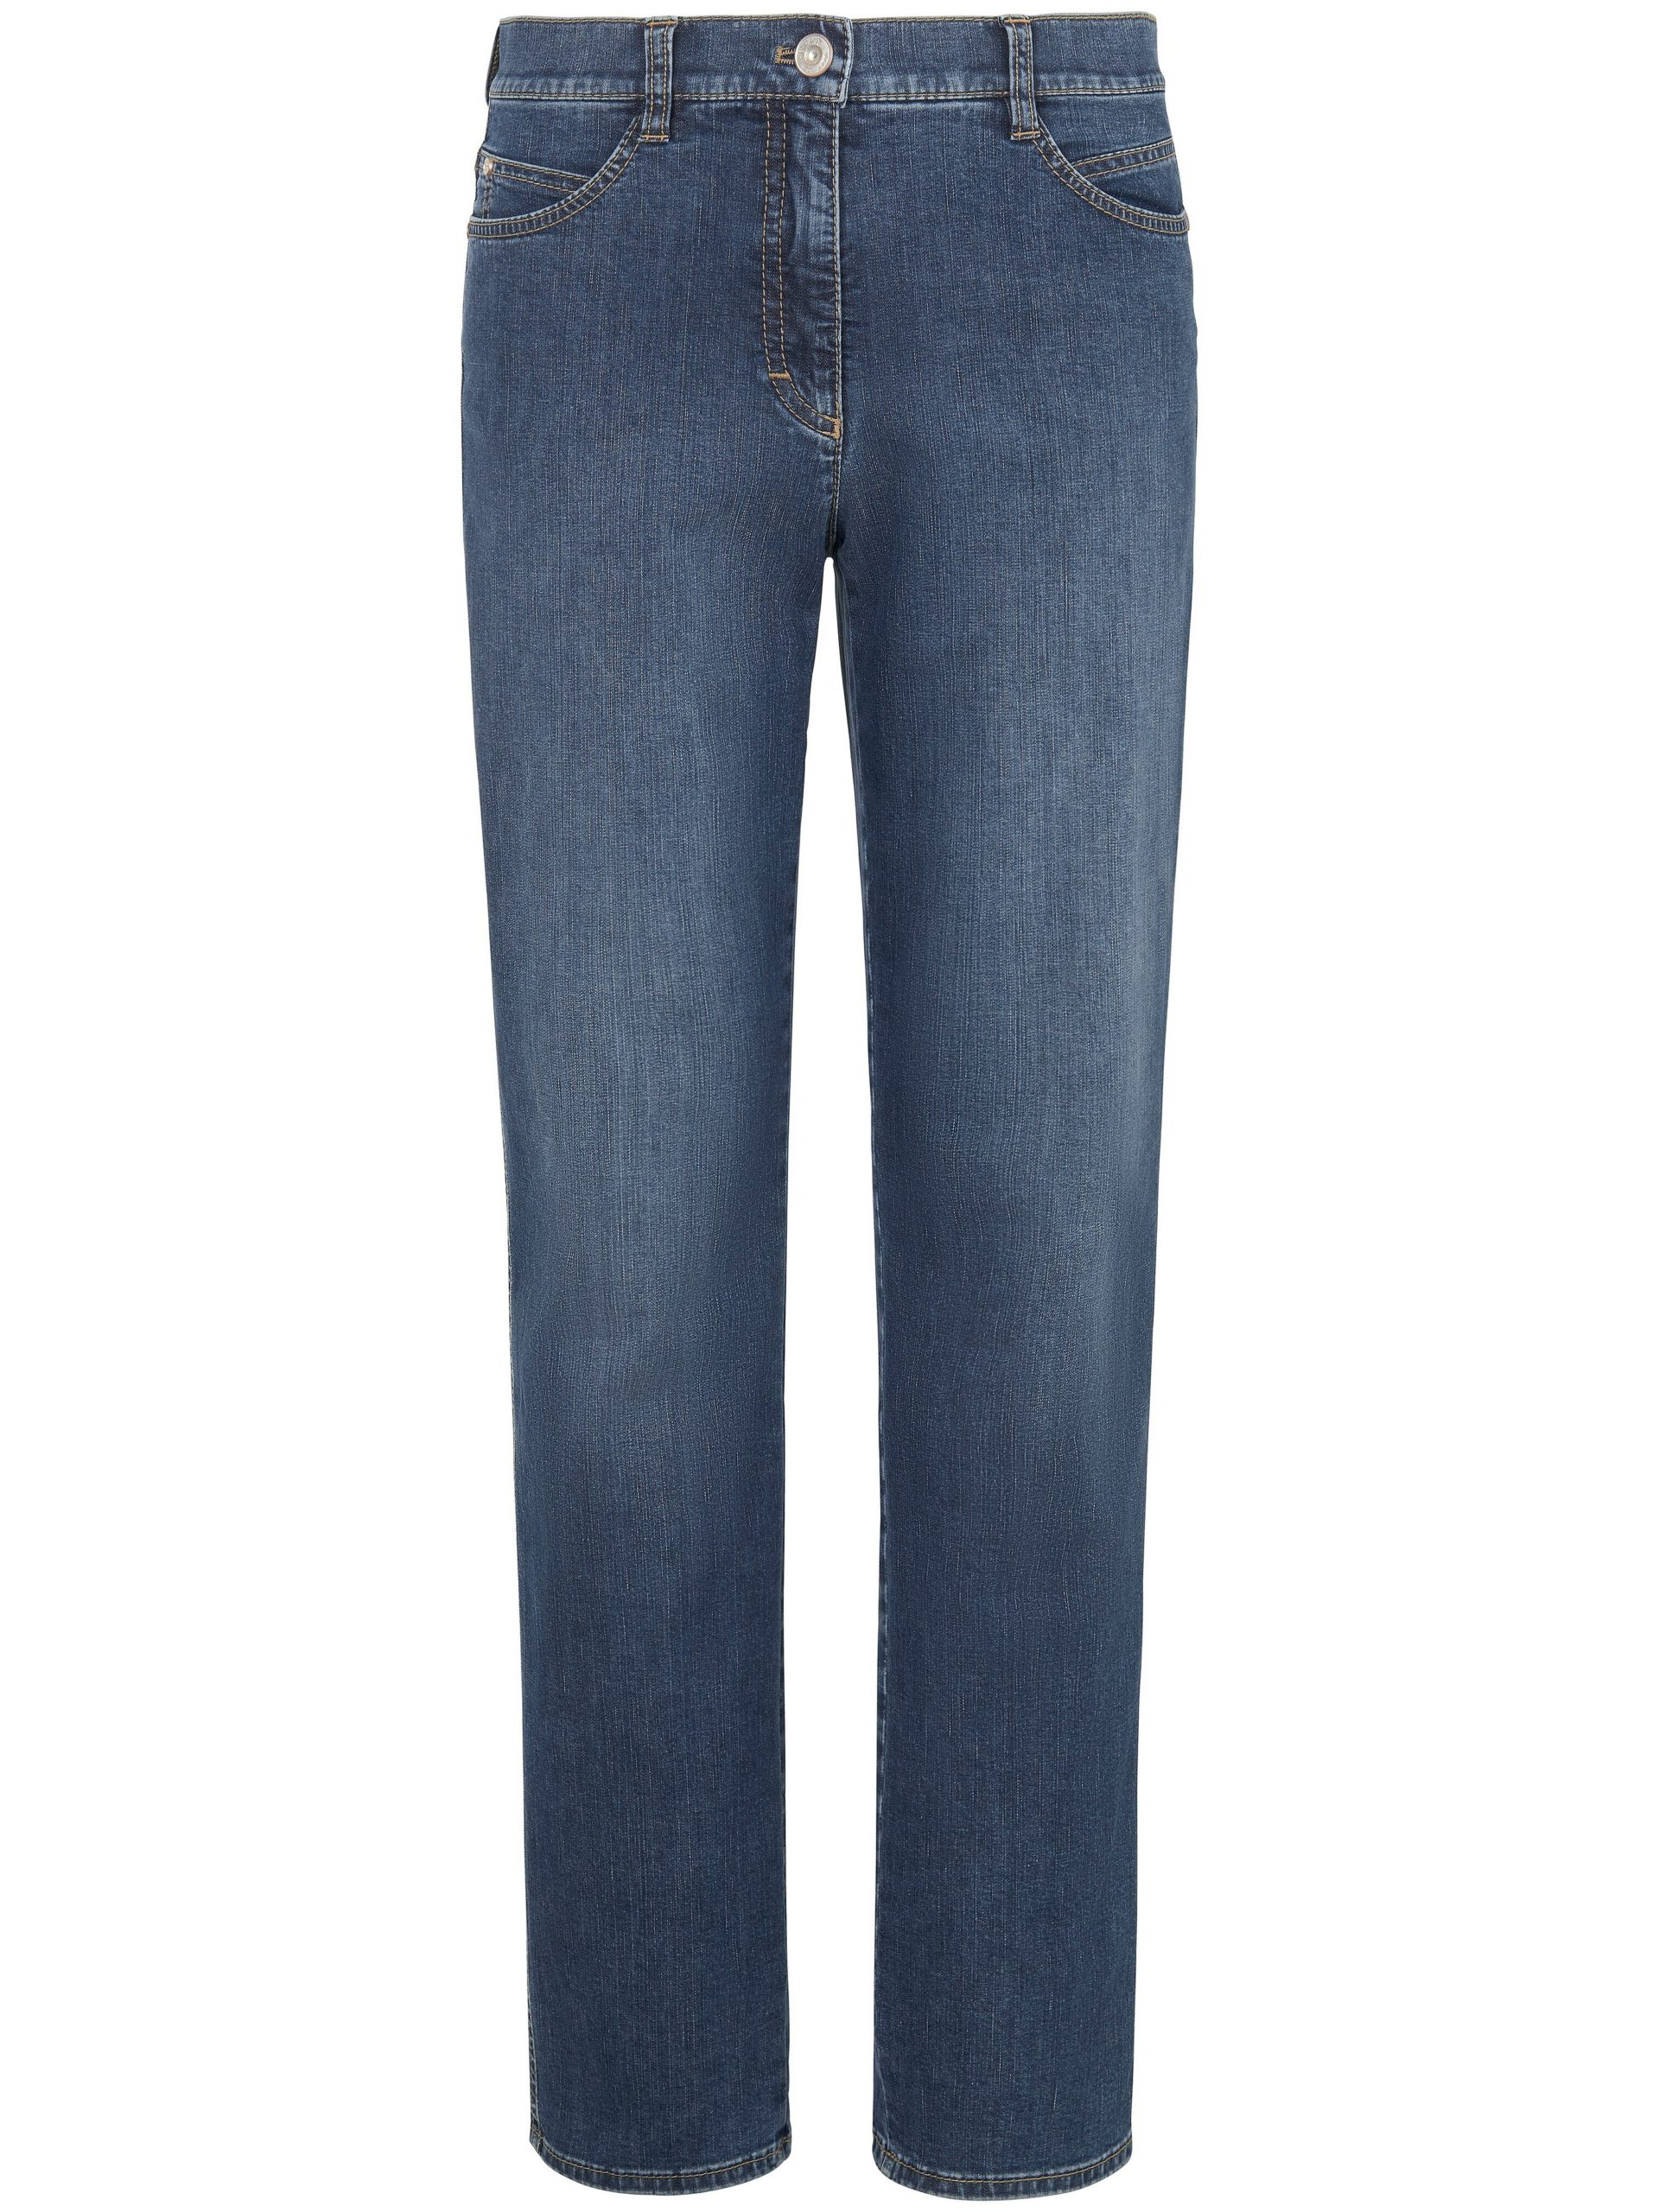 Feminine fit jeans, model Nicola Van Brax Feel Good denim Kopen